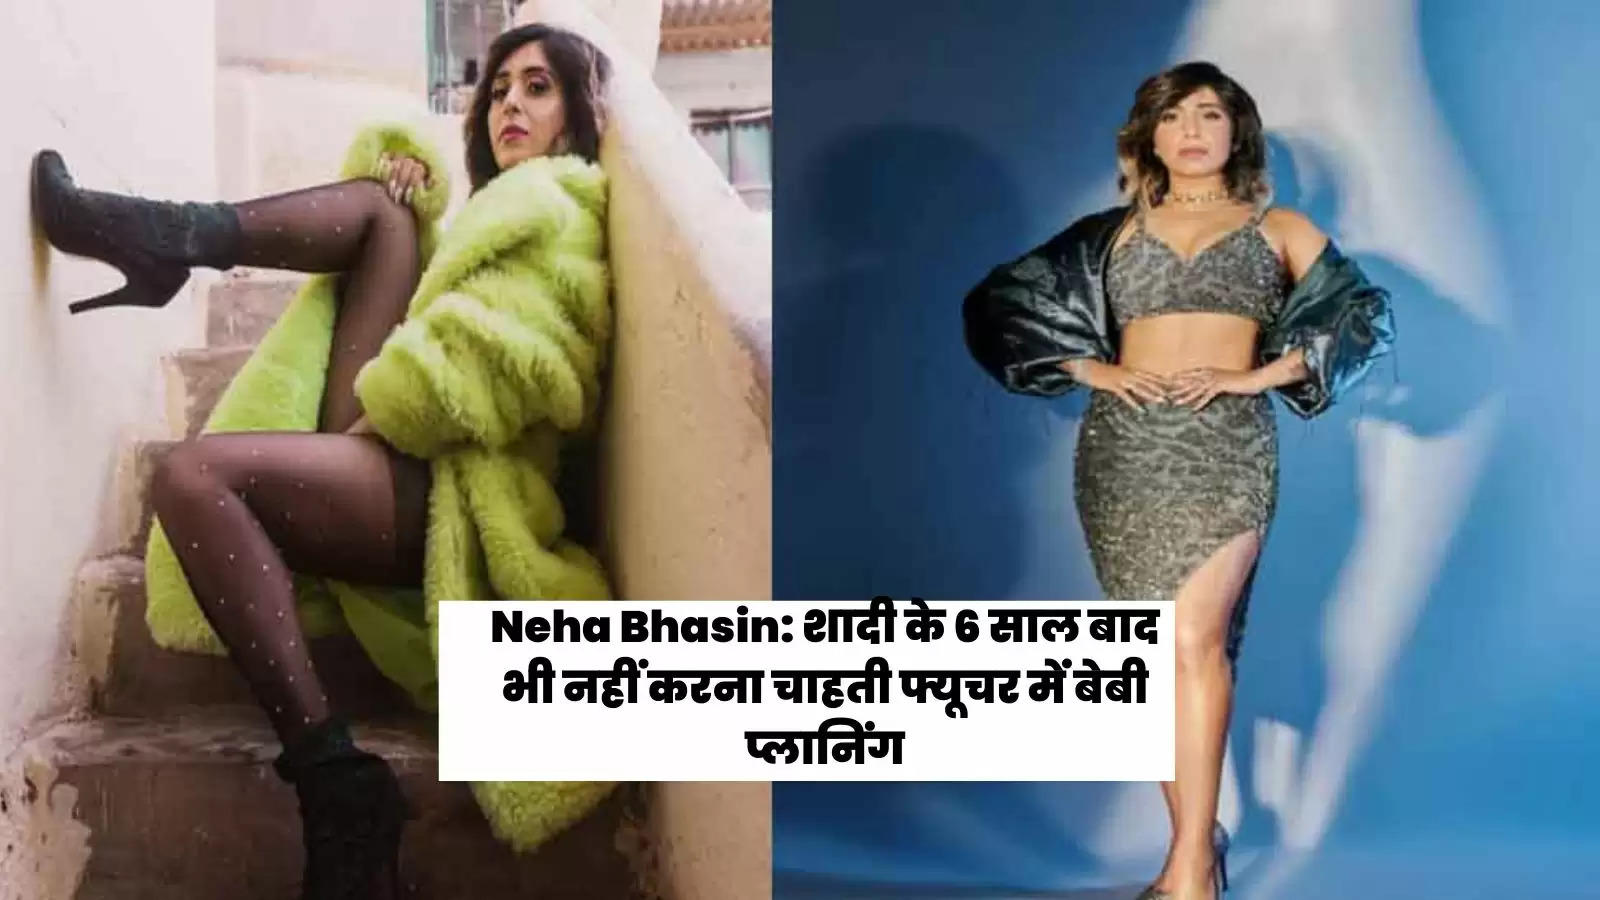 Singer Neha Bhasin